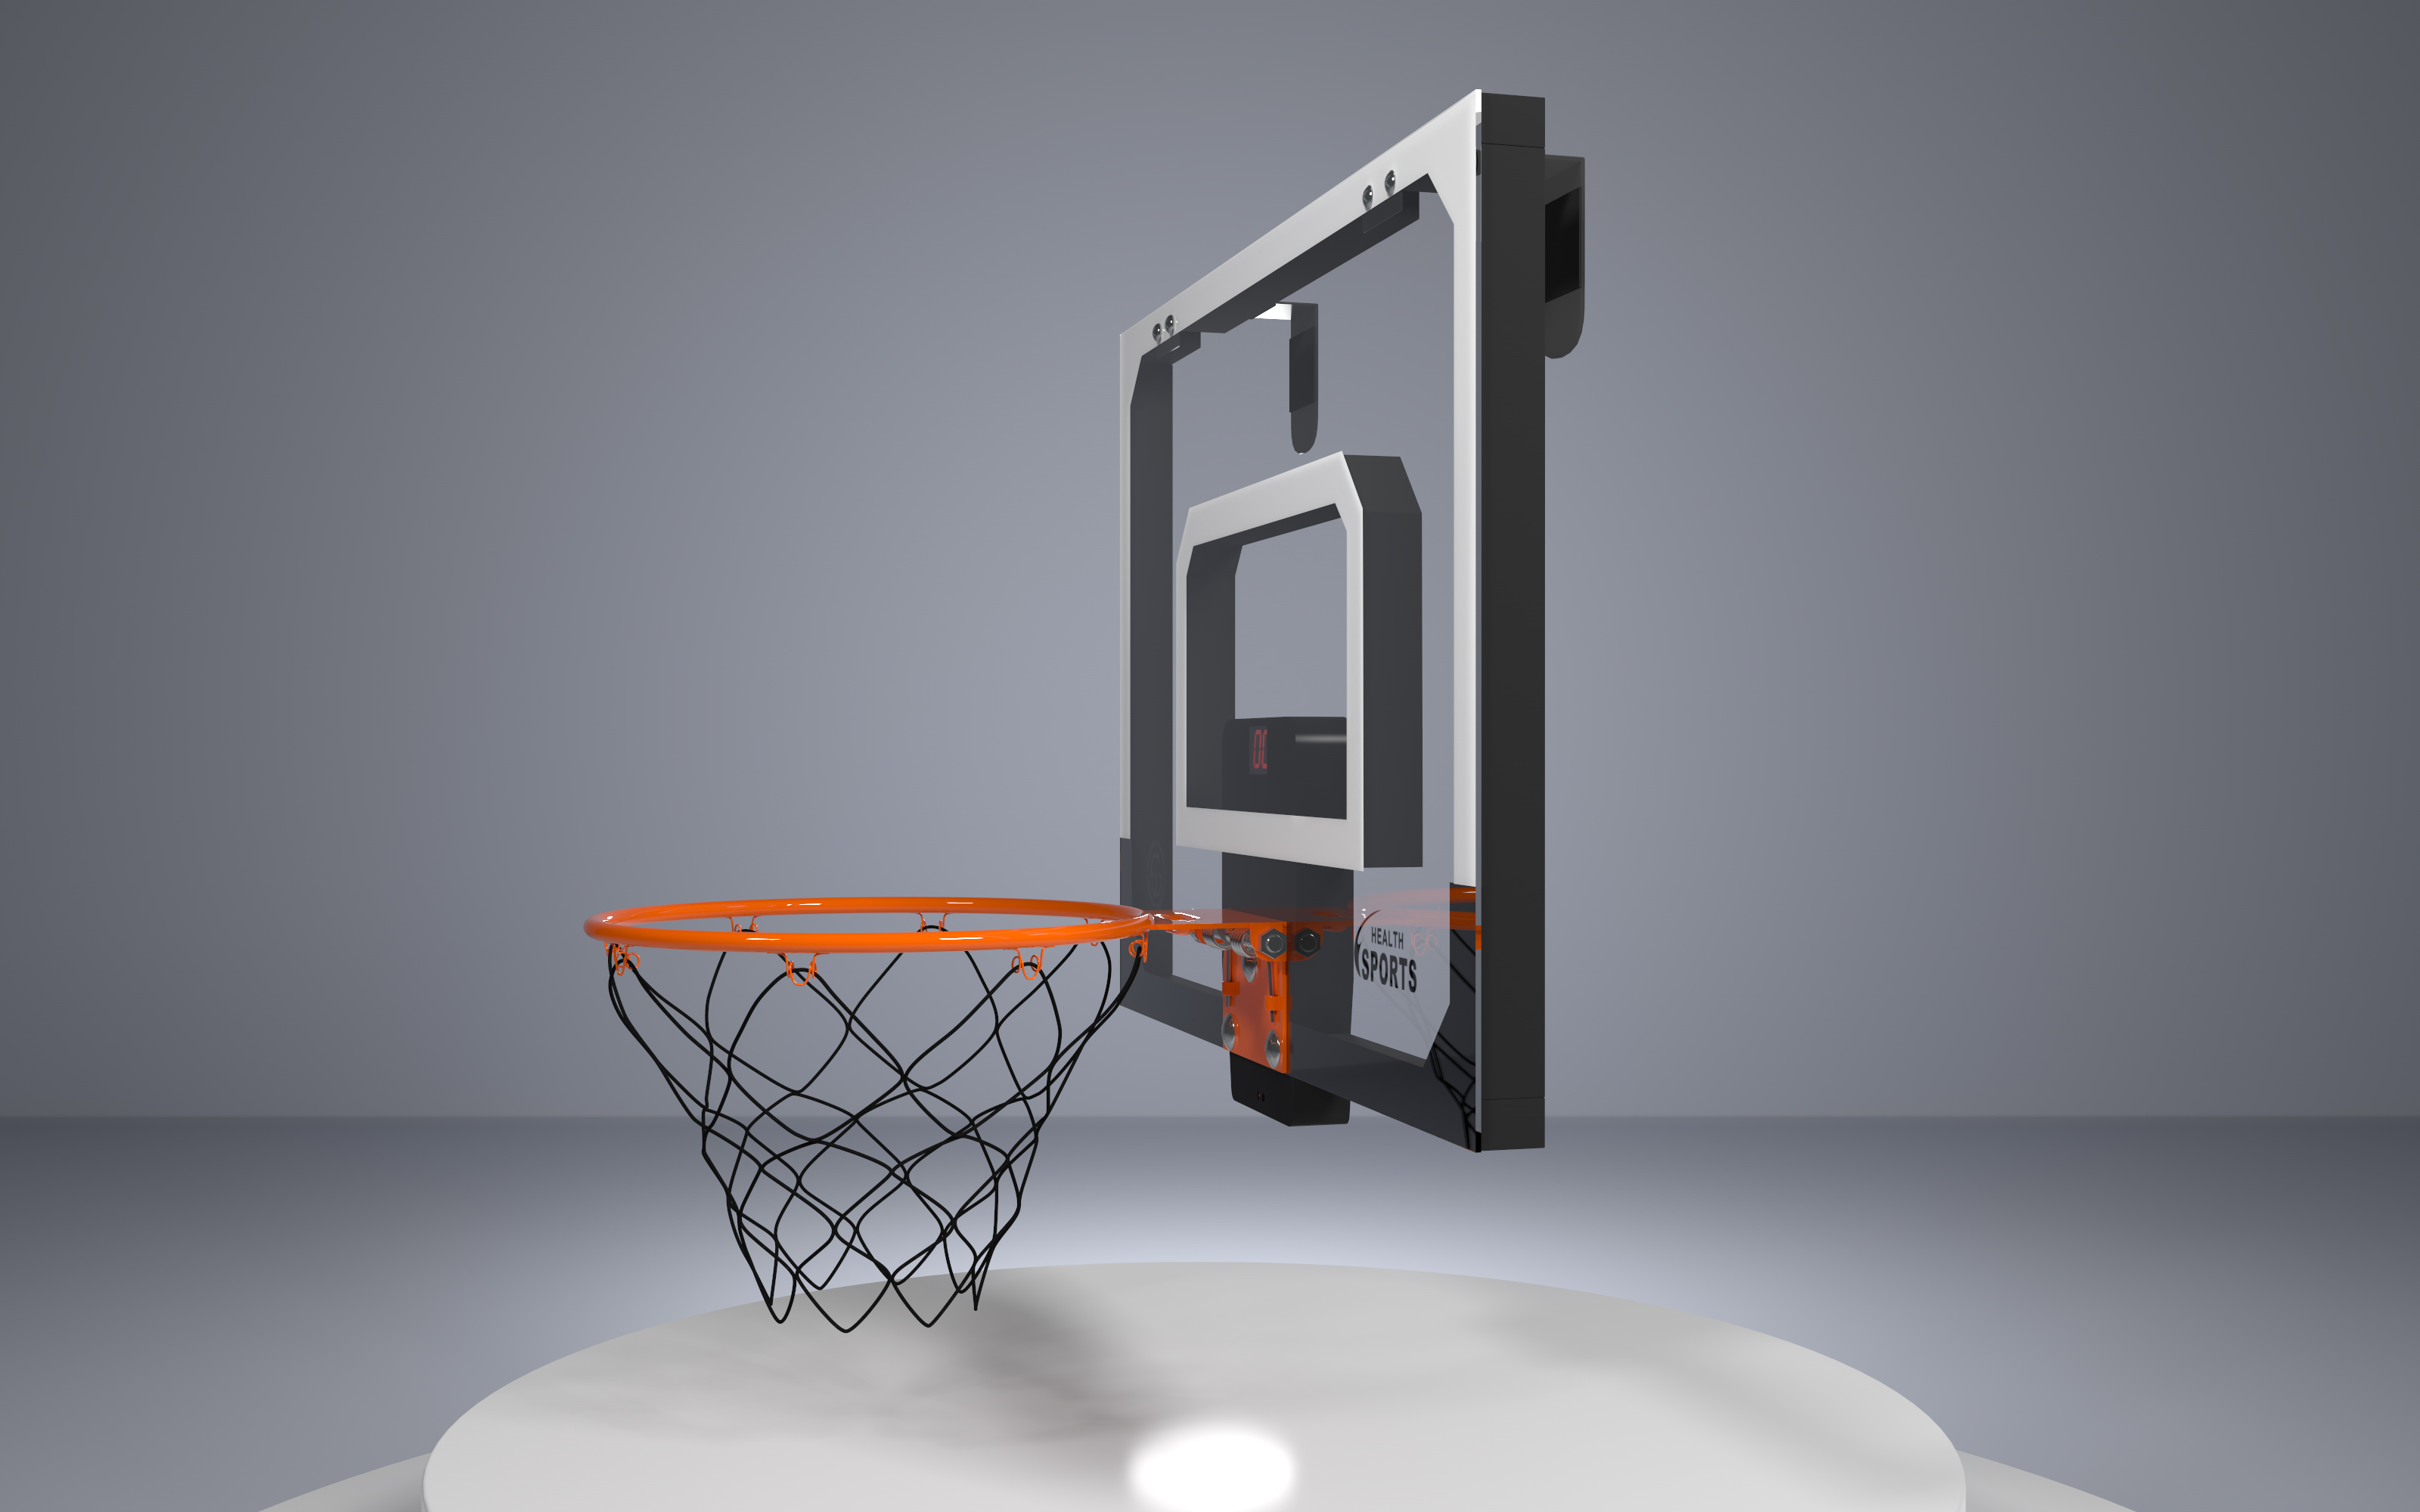 Super Joy Indoor Mini Basketball Hoop and Balls 17.8 x 14'' - Basketb –  ManCave Games